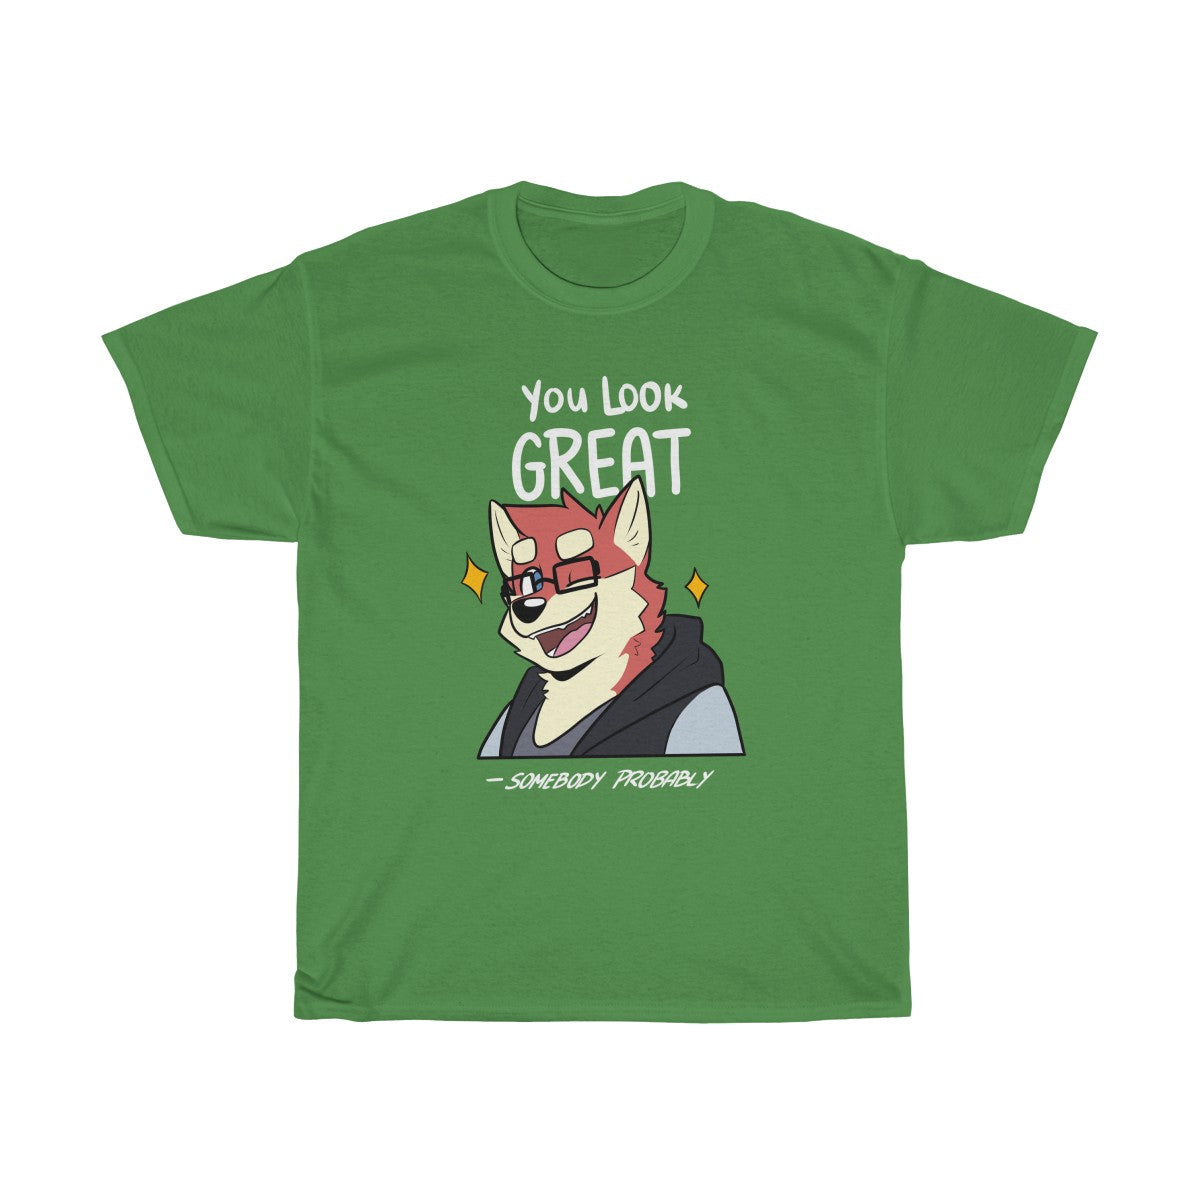 You Look Great - T-Shirt T-Shirt Ooka Green S 